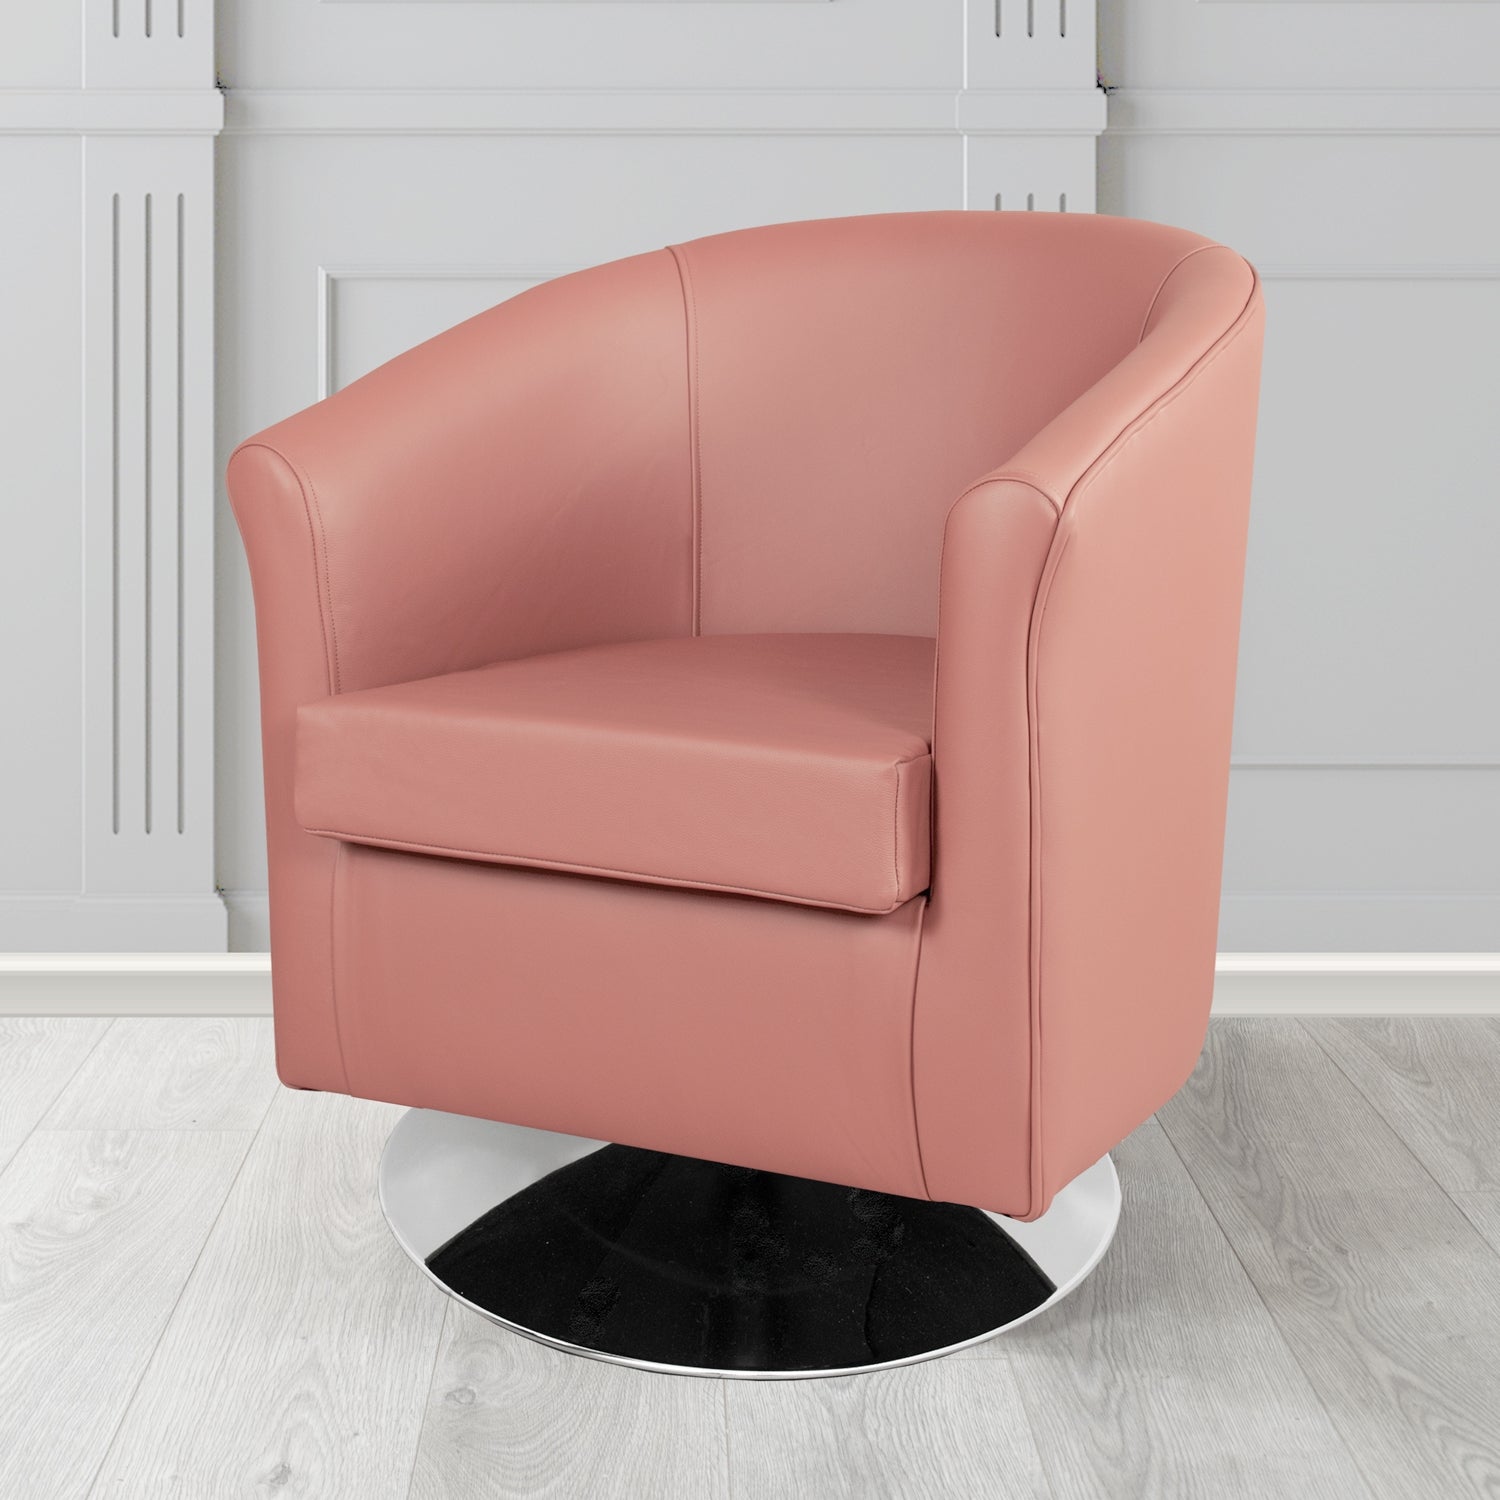 Tuscany Shelly Brick Red Crib 5 Genuine Leather Swivel Tub Chair - The Tub Chair Shop